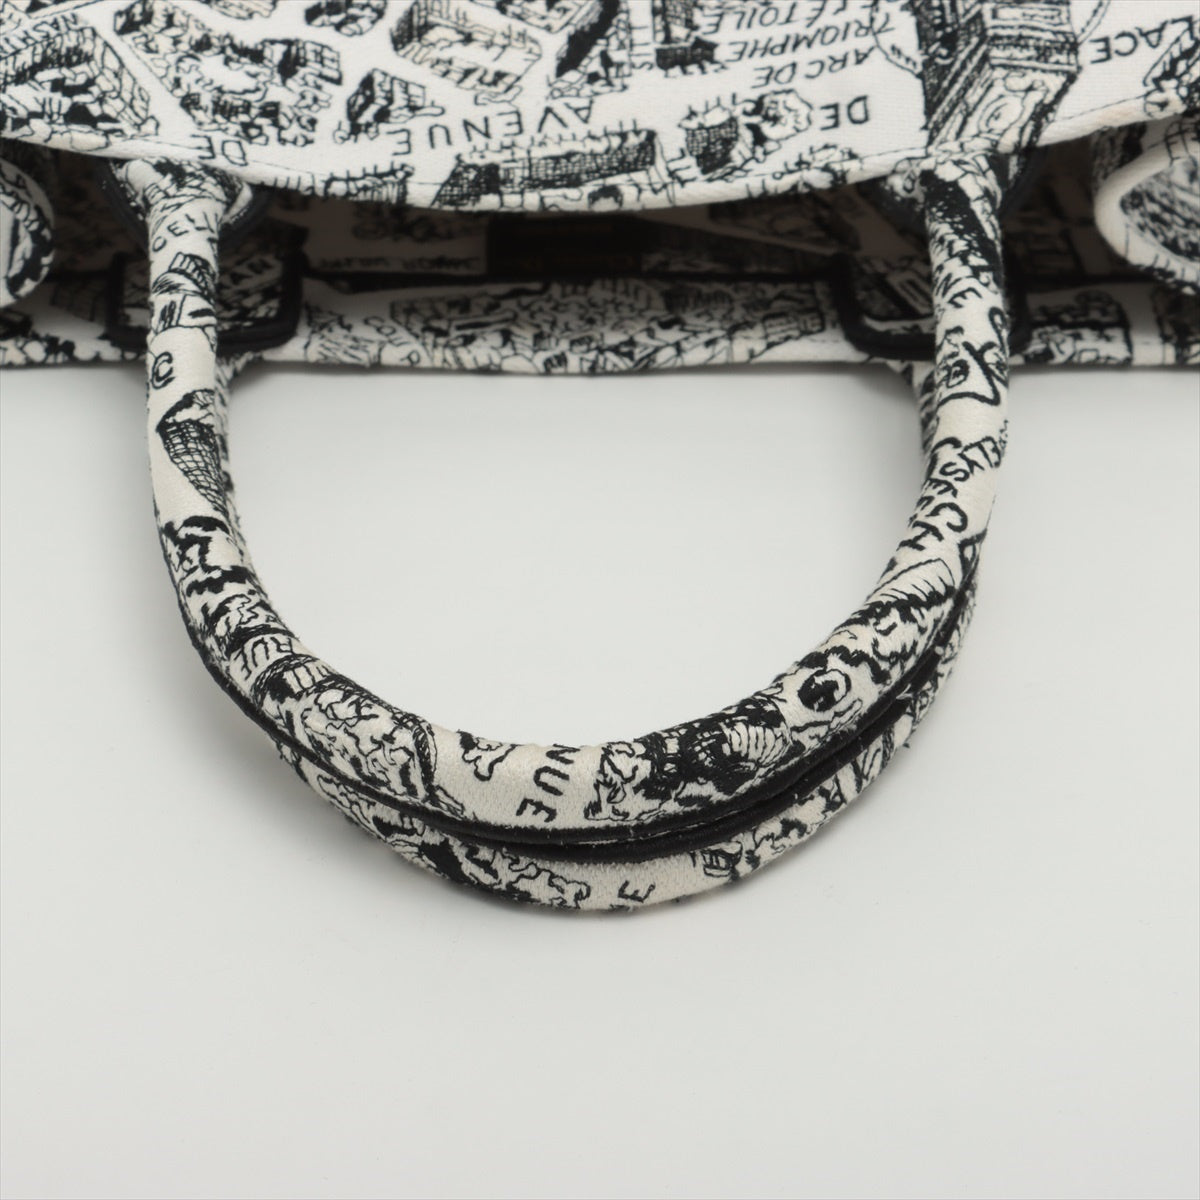 Christian Dior Plan de Paris Book Tote canvass Tote bag Black × White